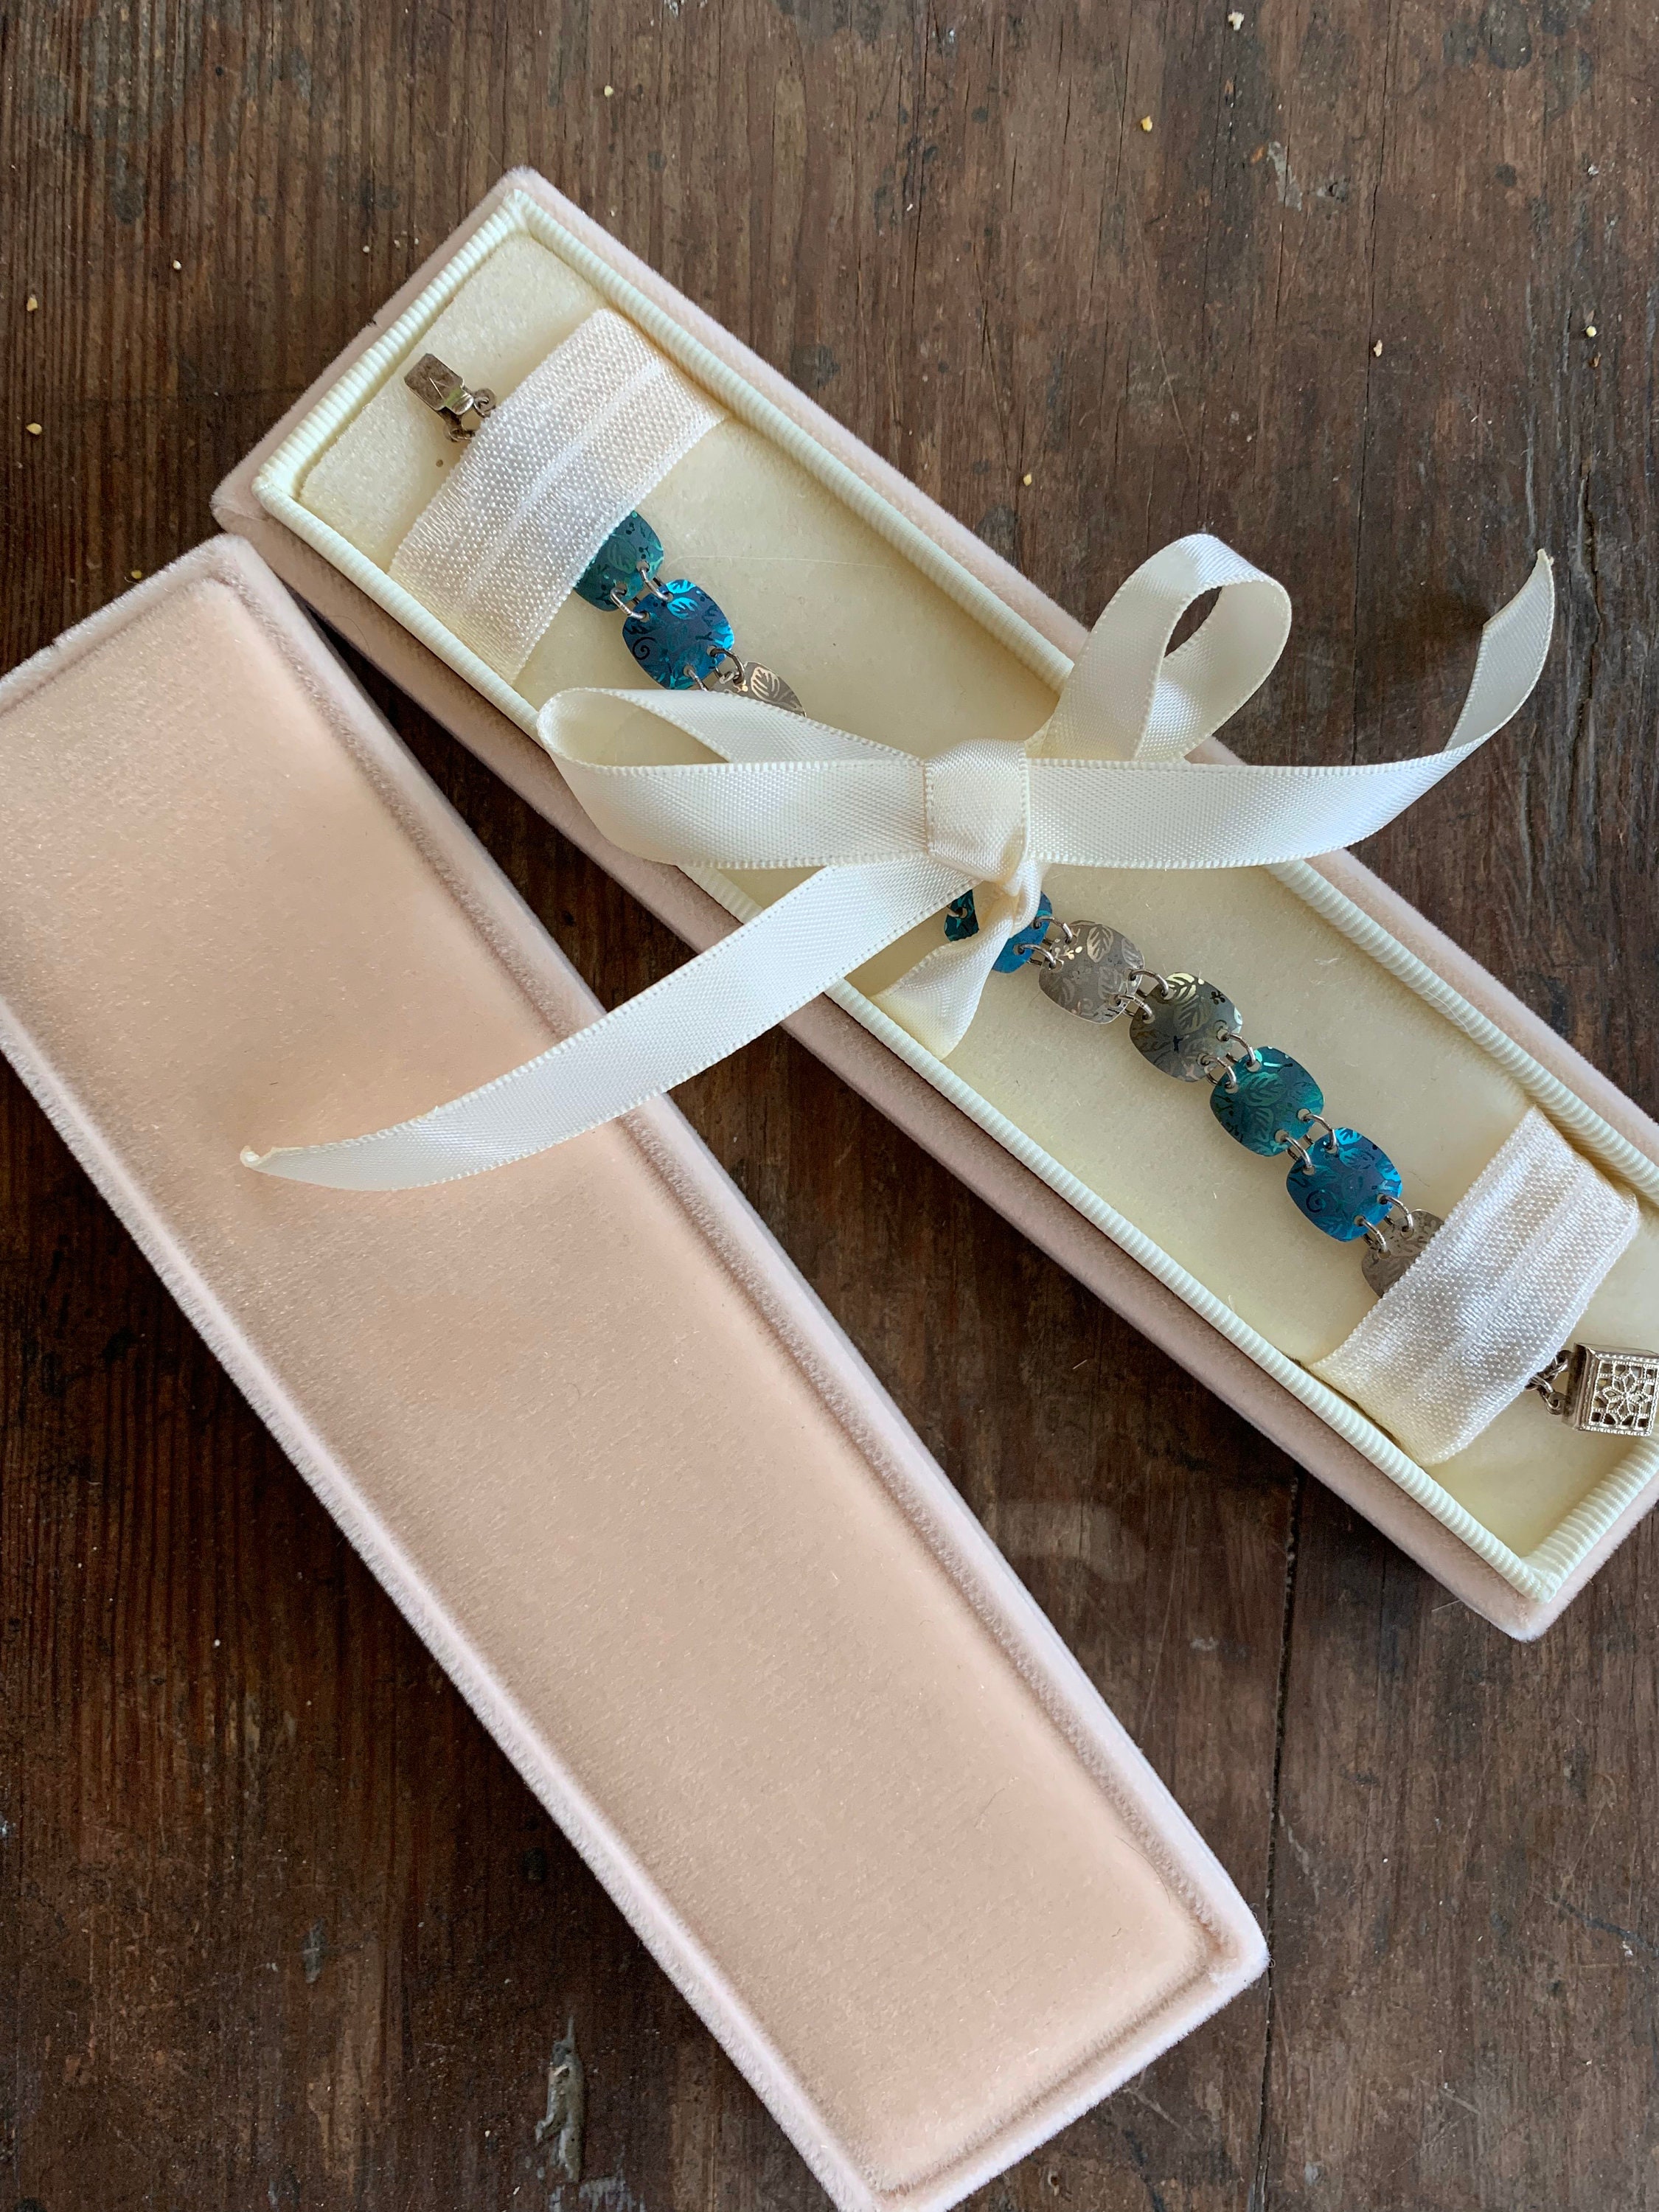 Oirlv Royal Velvet Bracelet Bangle Gift Box Multifunctional Jewelry Storage Case 